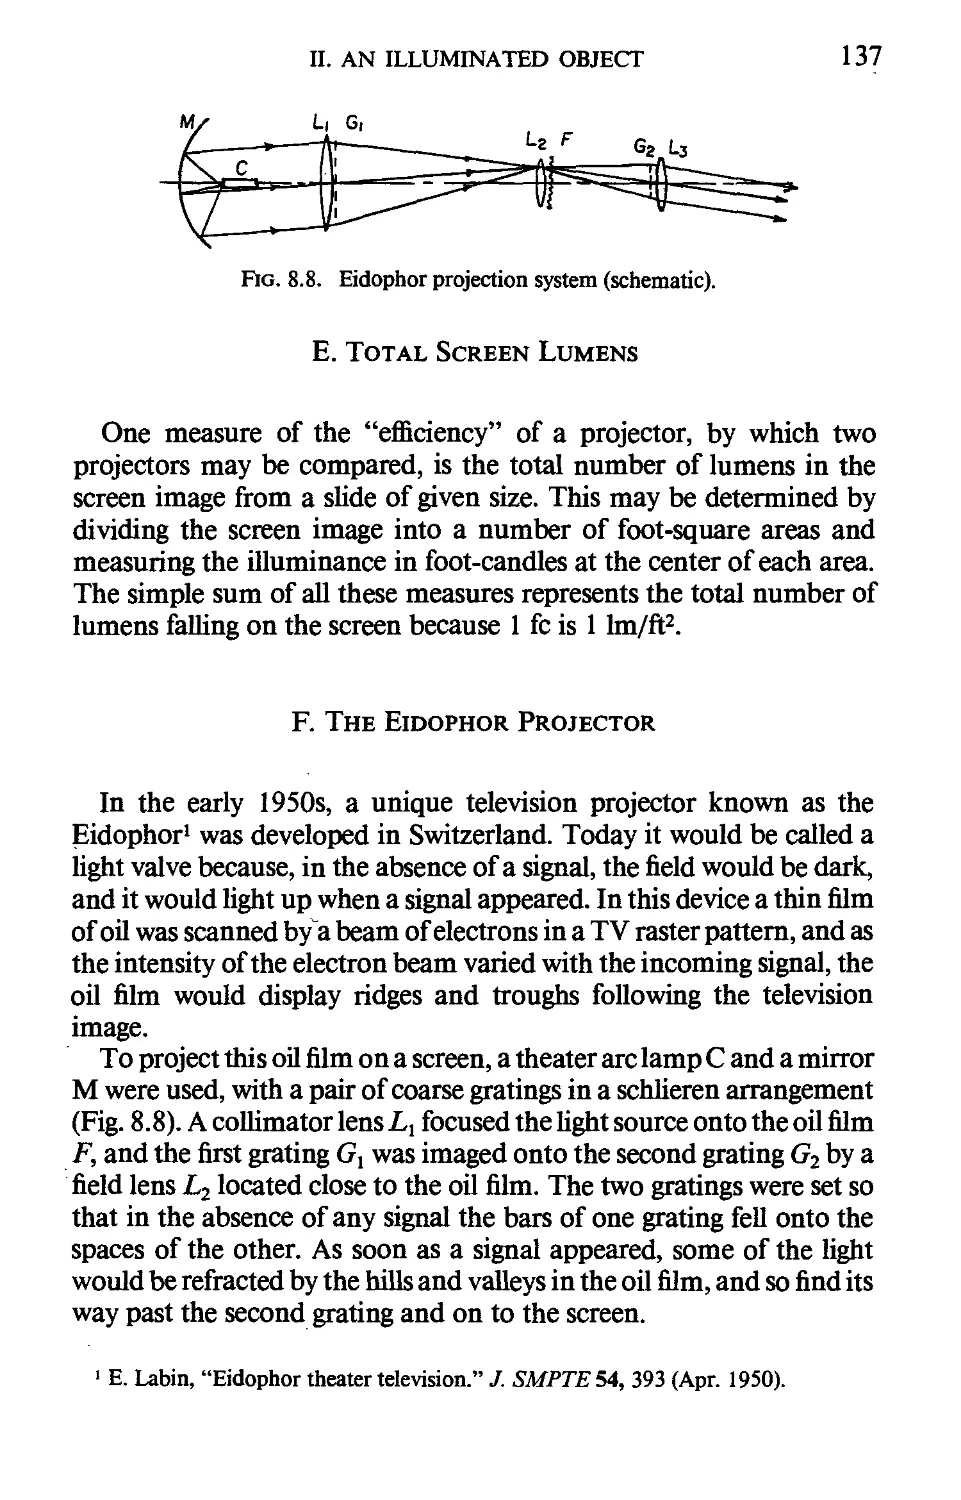 E. Total Screen Lumens
F. The Eidophor Projector